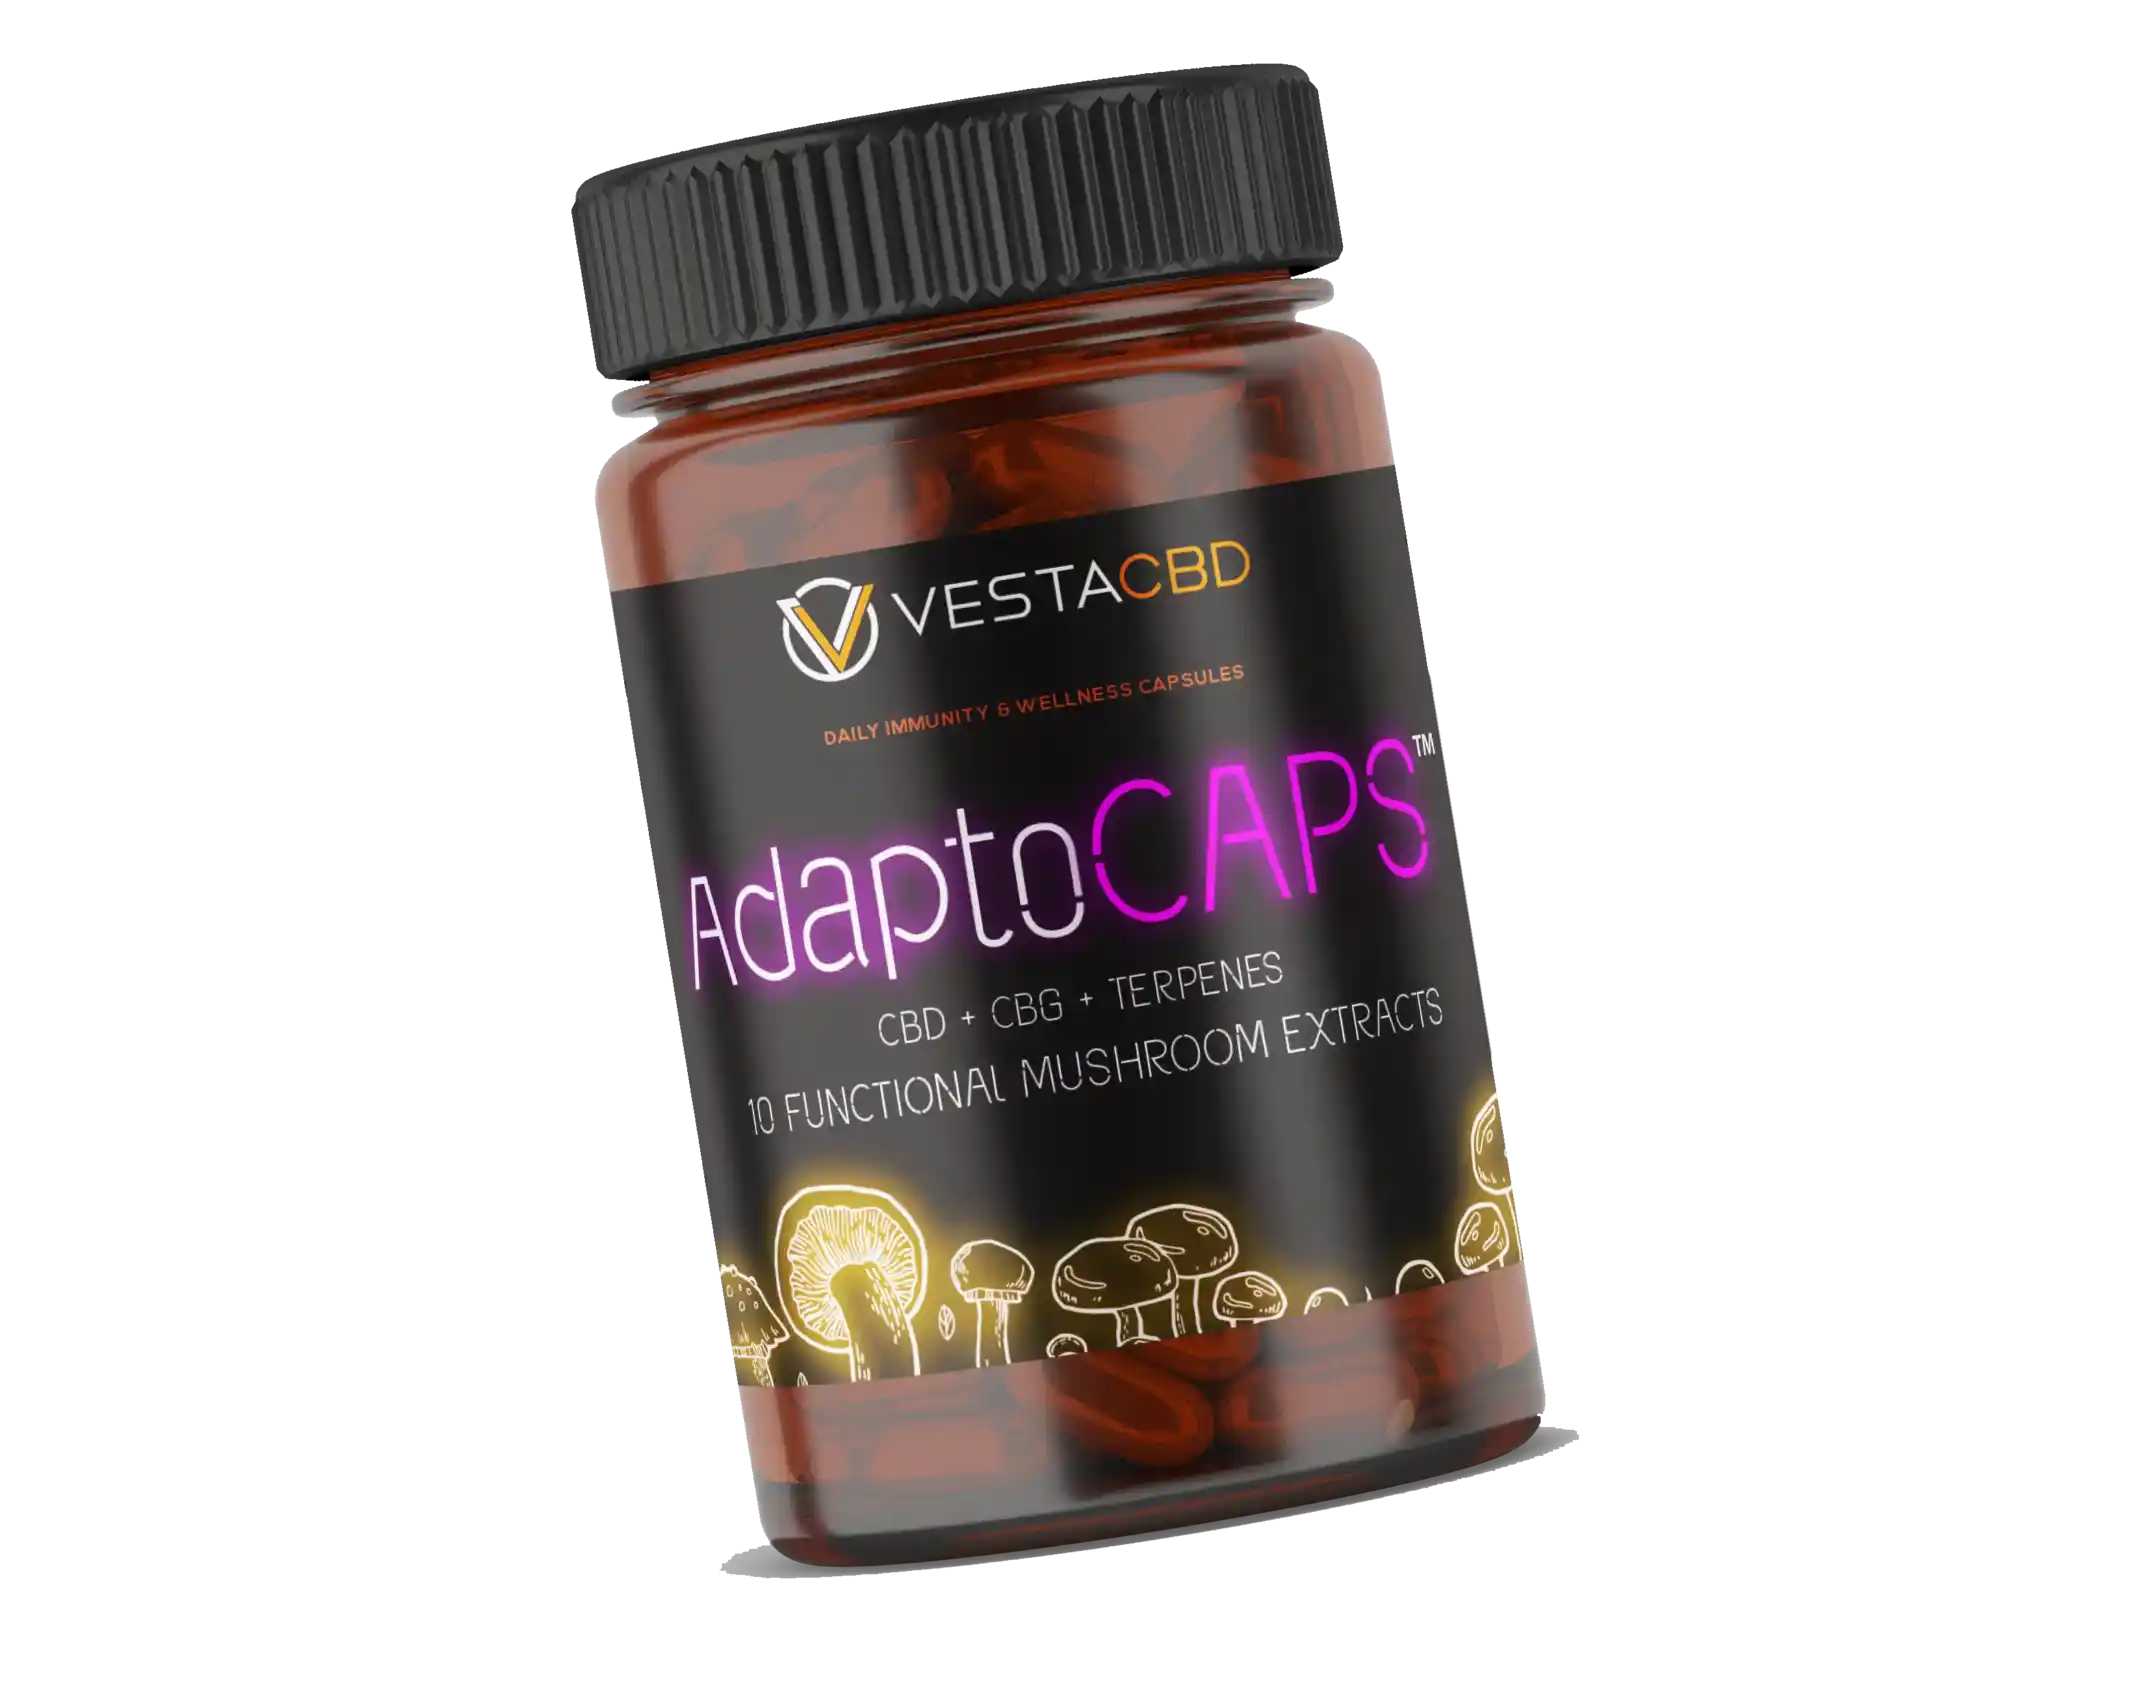 AdaptoCaps by Vesta CBD - CBD Capsules with Adaptogenic Mushroom blend and terpenes